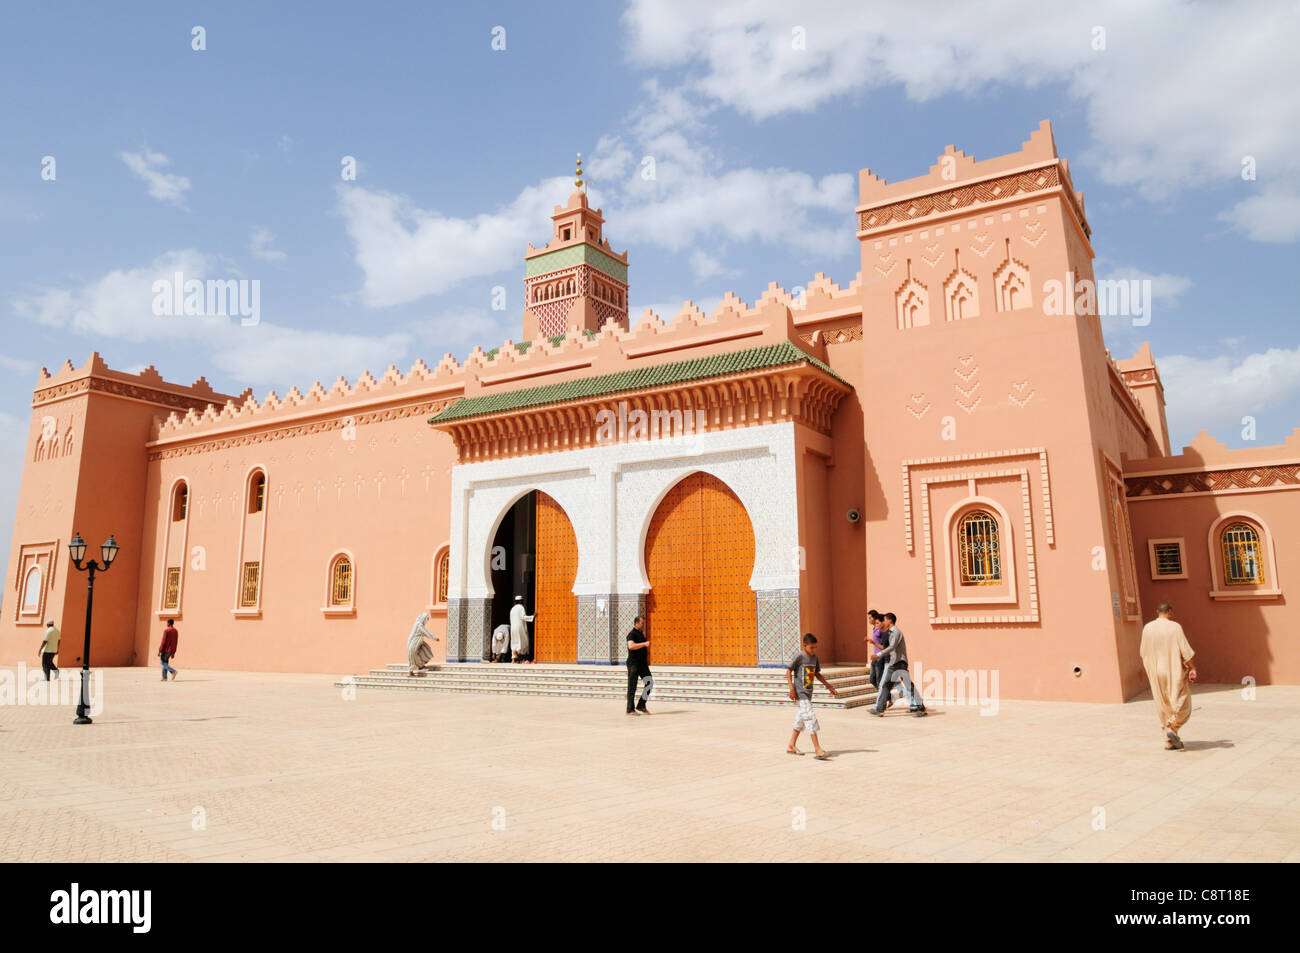 The Great Mosque, Zagora, Draa Valley Region, Morocco Stock Photo